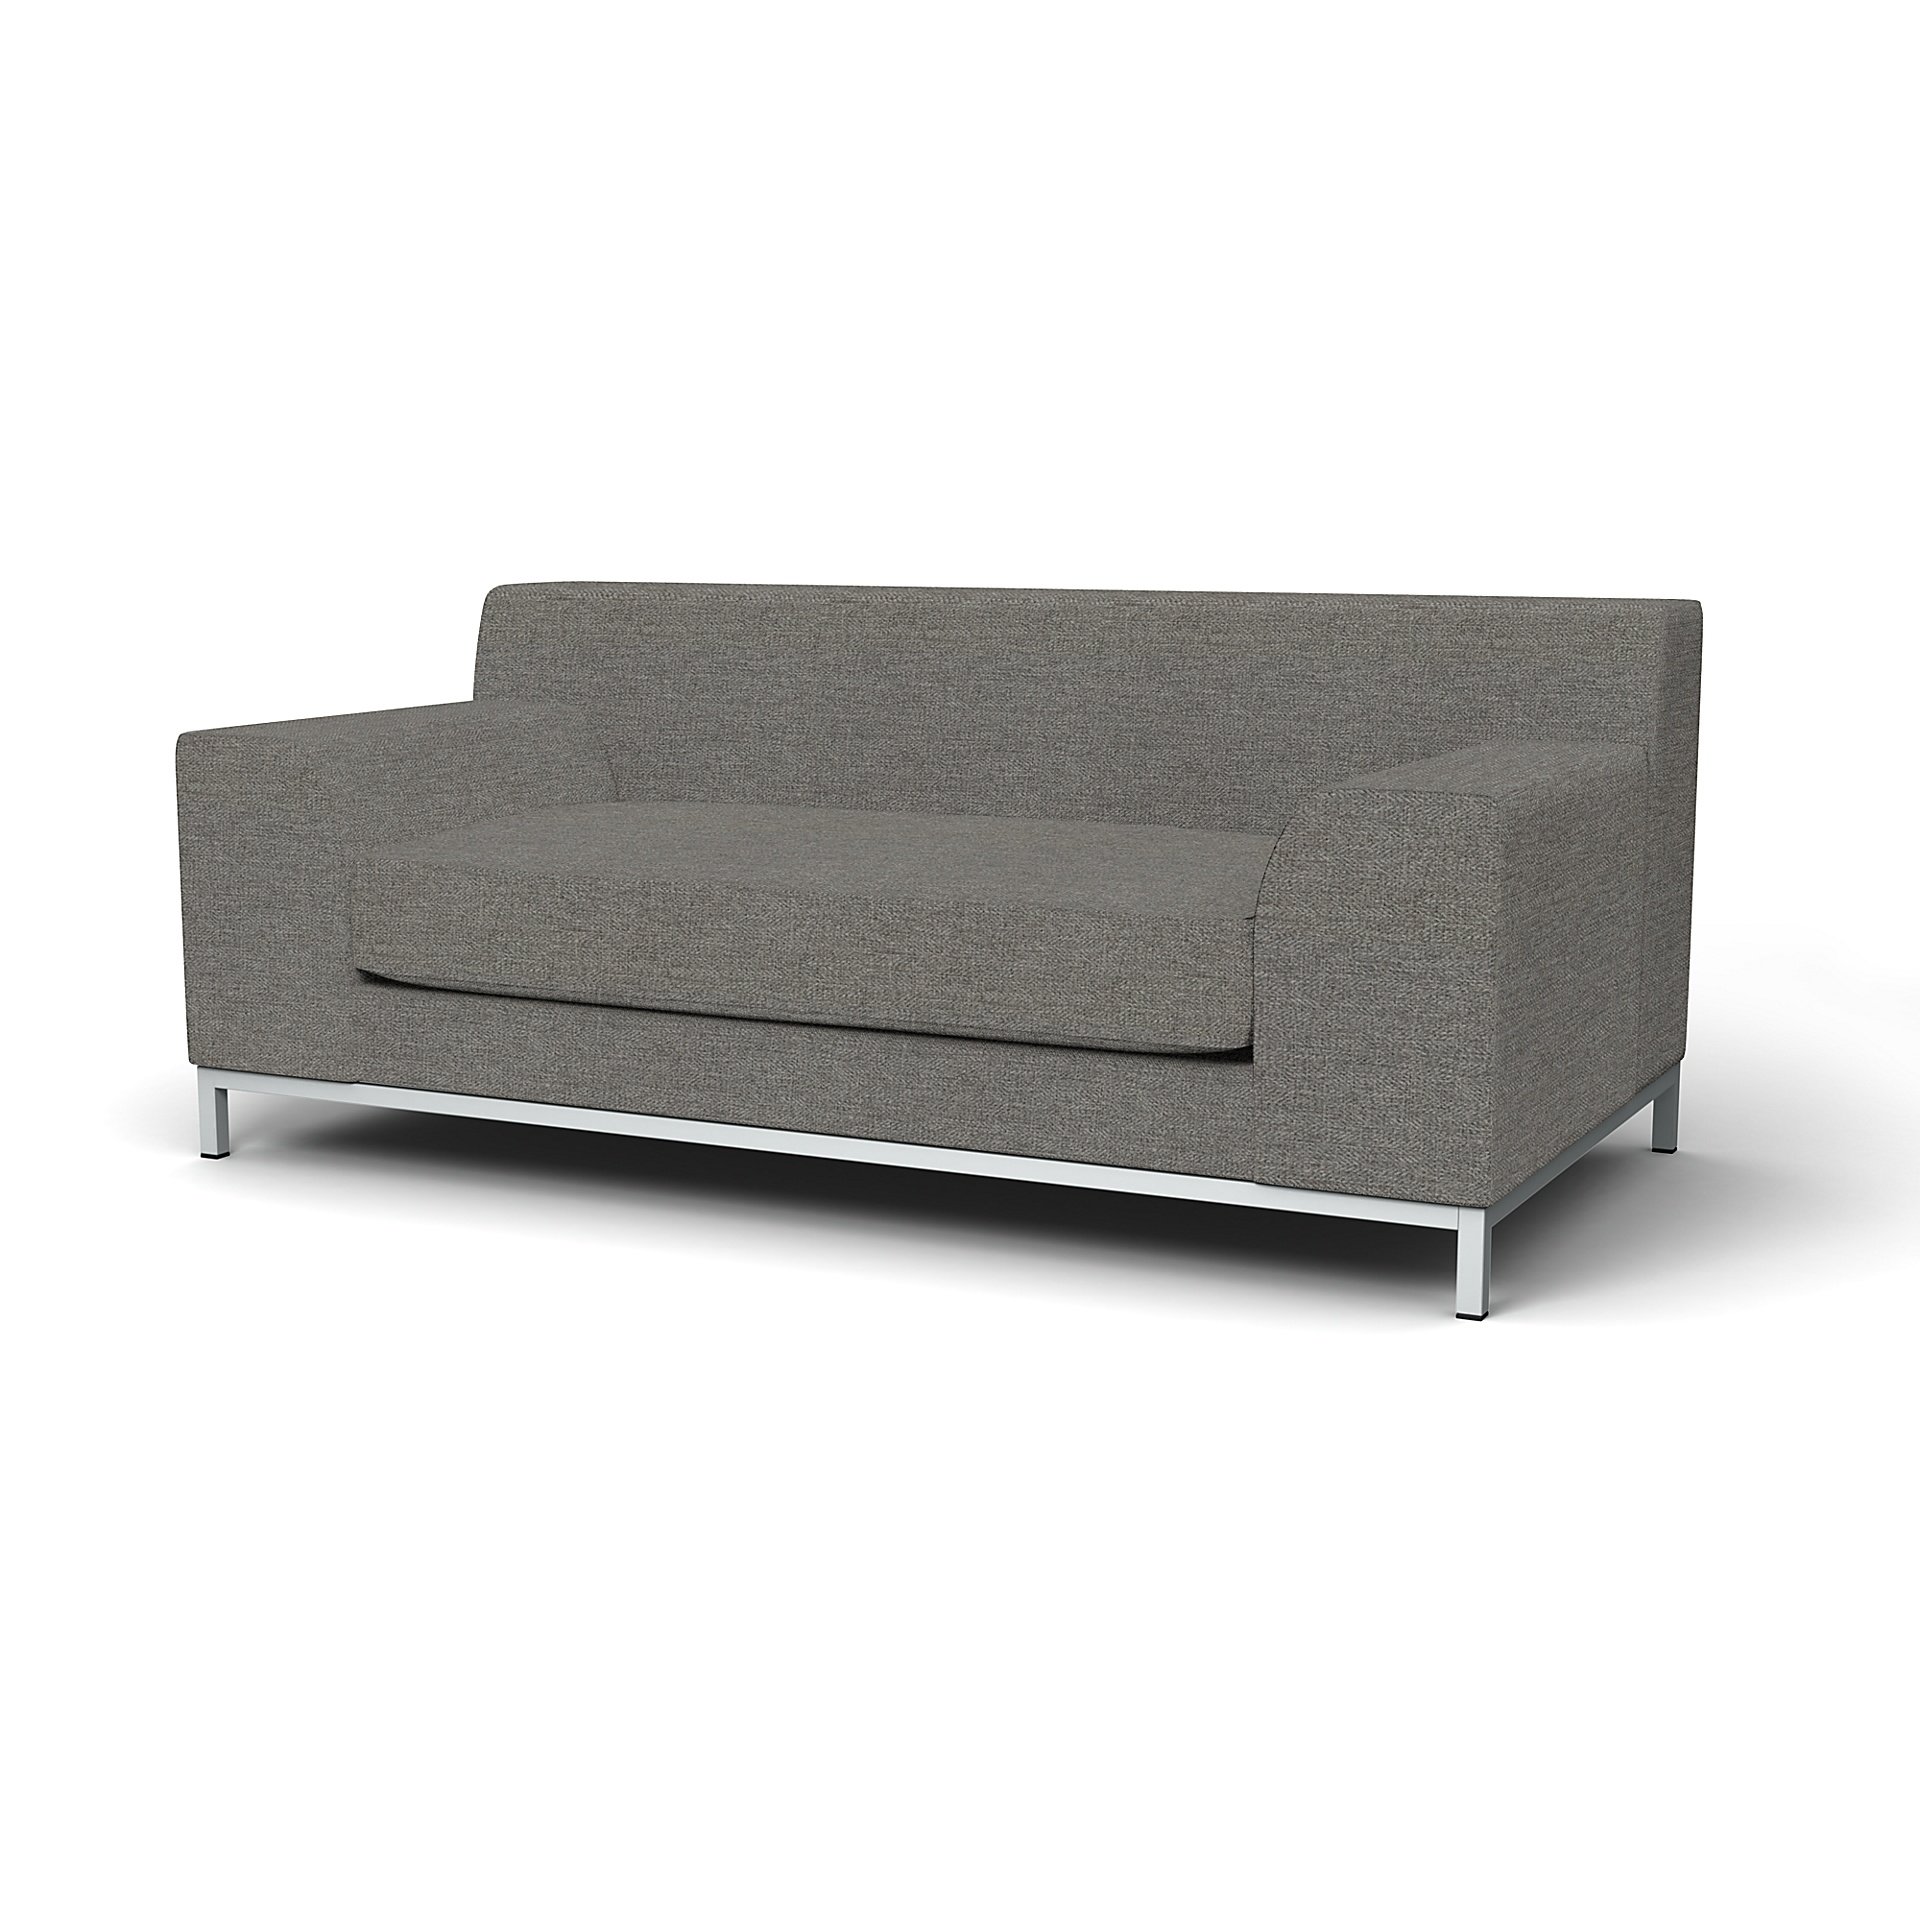 IKEA - Kramfors 2 Seater Sofa Cover, Taupe, Boucle & Texture - Bemz